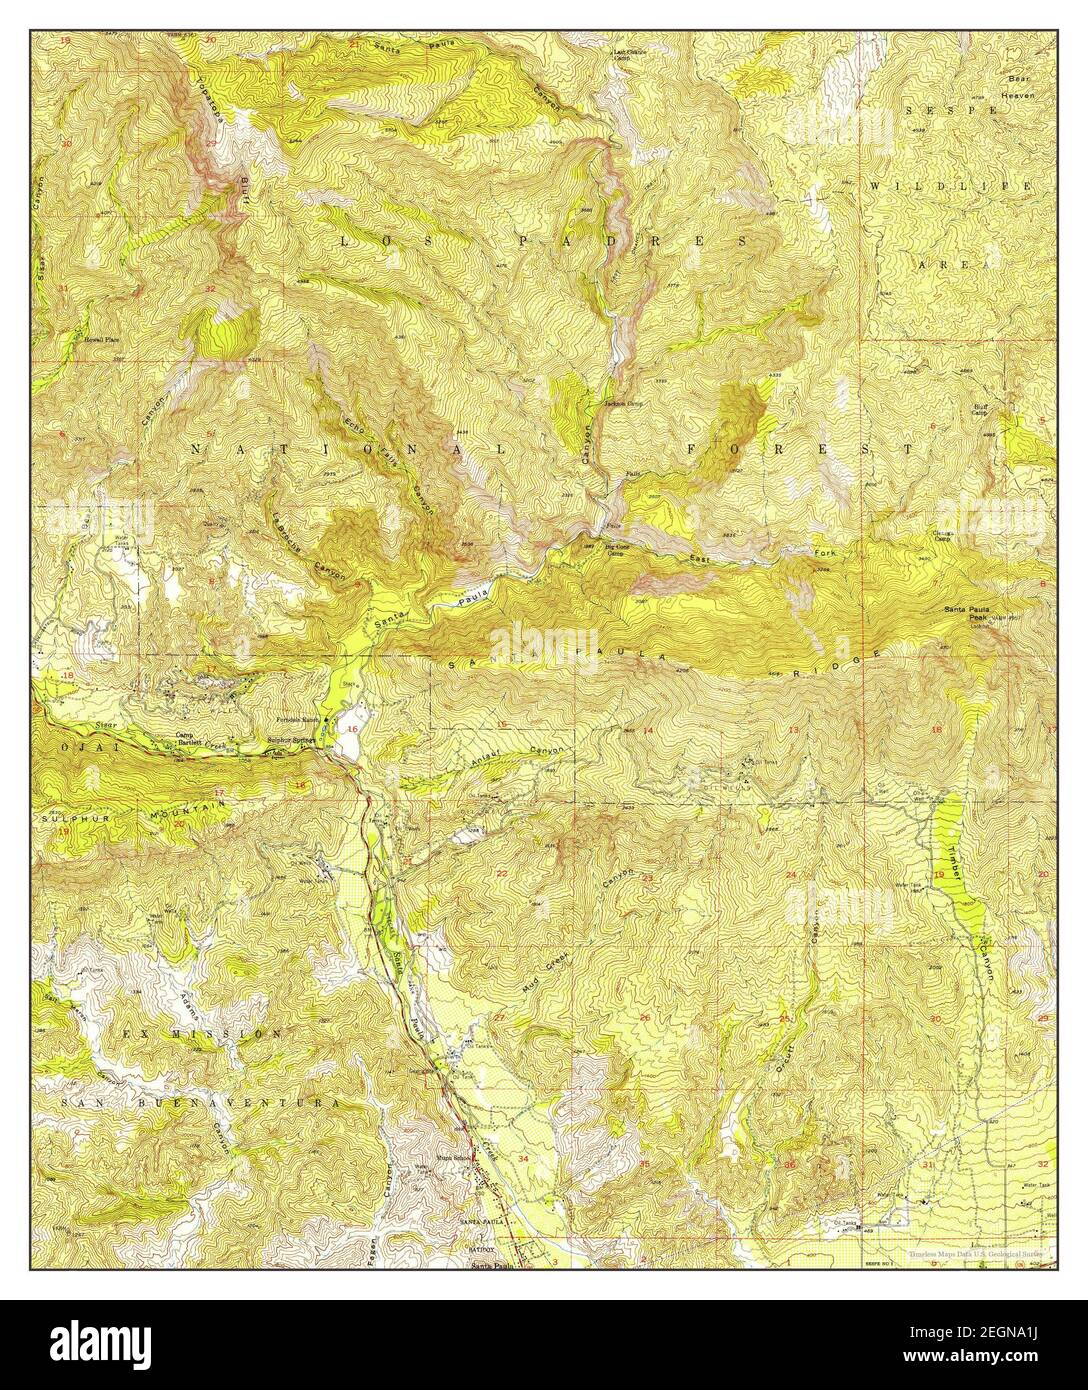 Santa Paula Peak, California, map 1951, 1:24000, United States of America by Timeless Maps, data U.S. Geological Survey Stock Photo